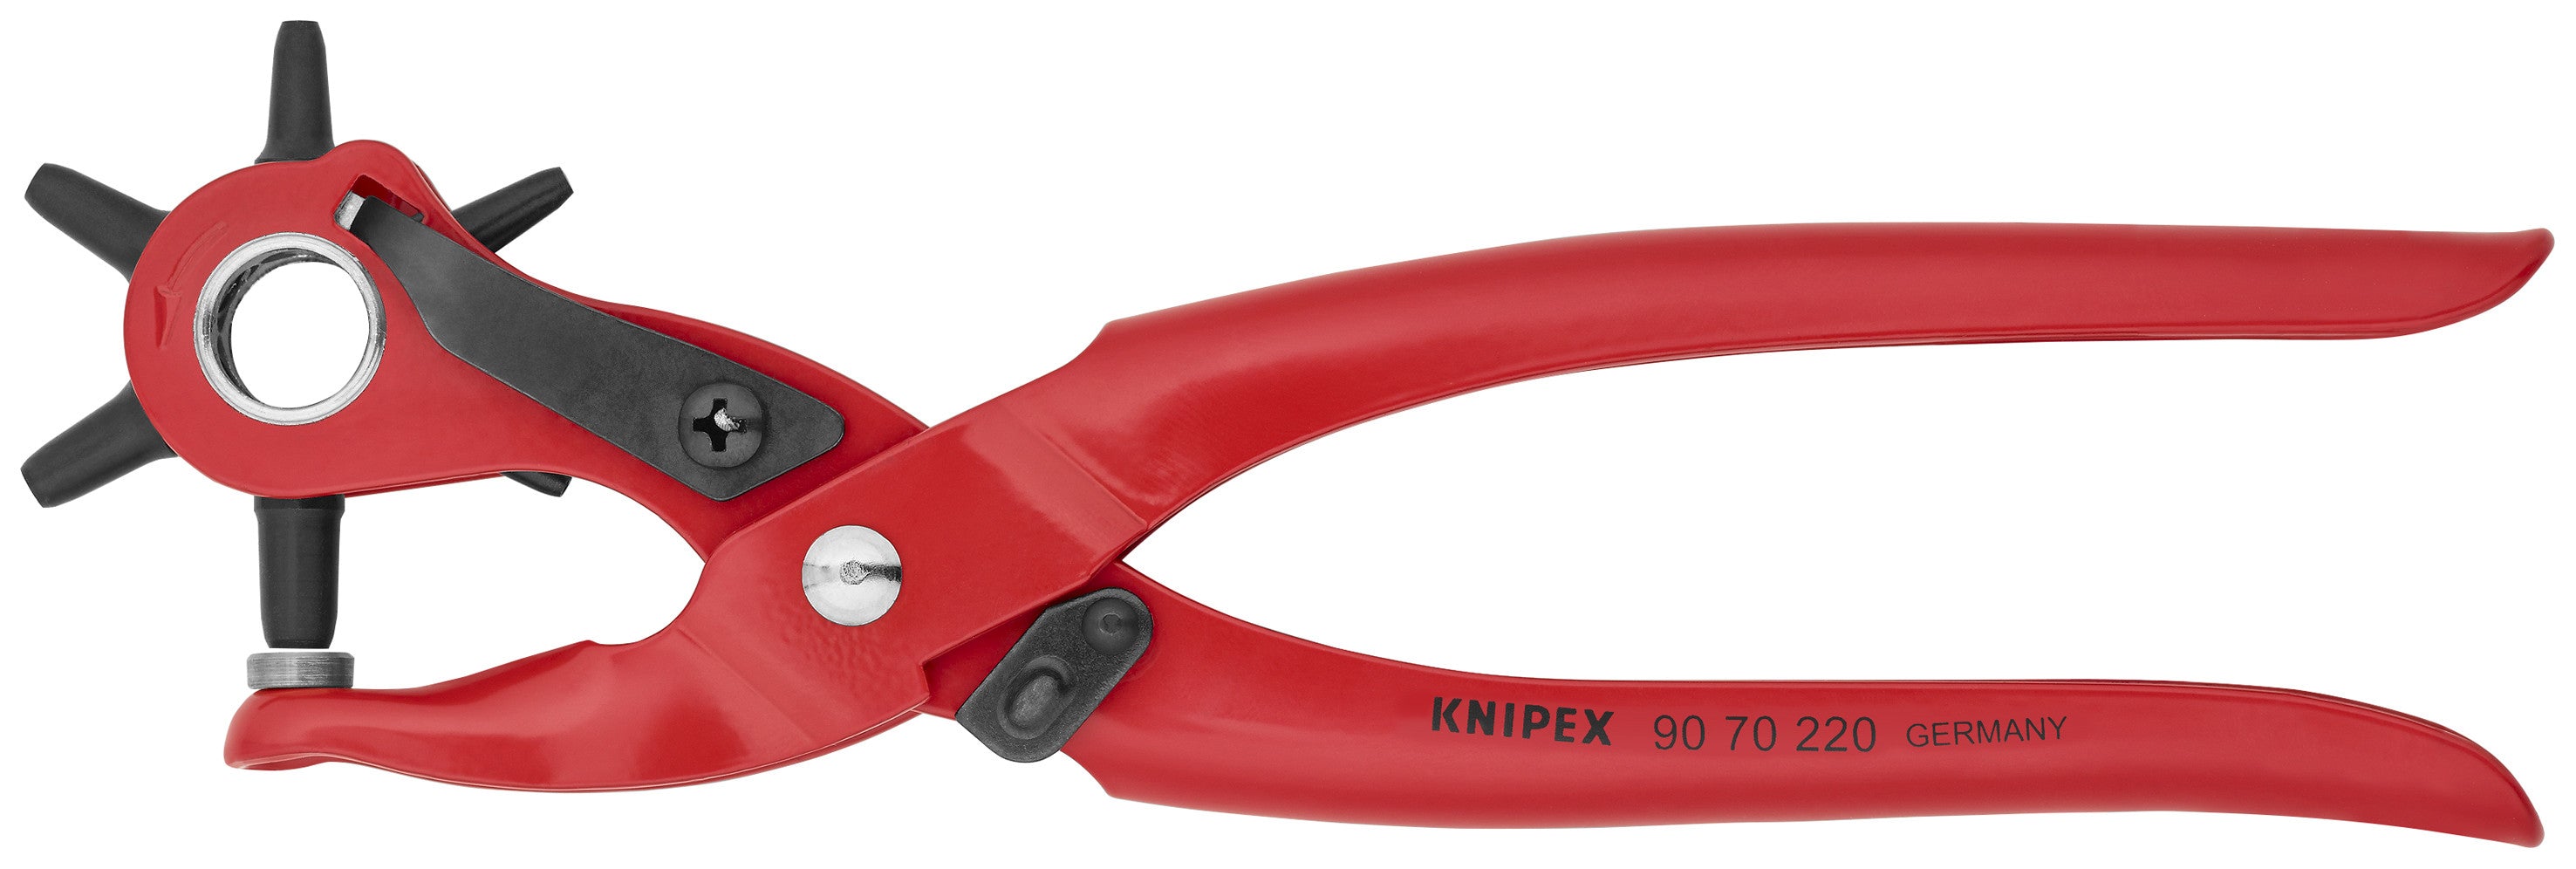 Knipex pinza fustellatrice art.90.70 mm 220 KNIPEX-WERK